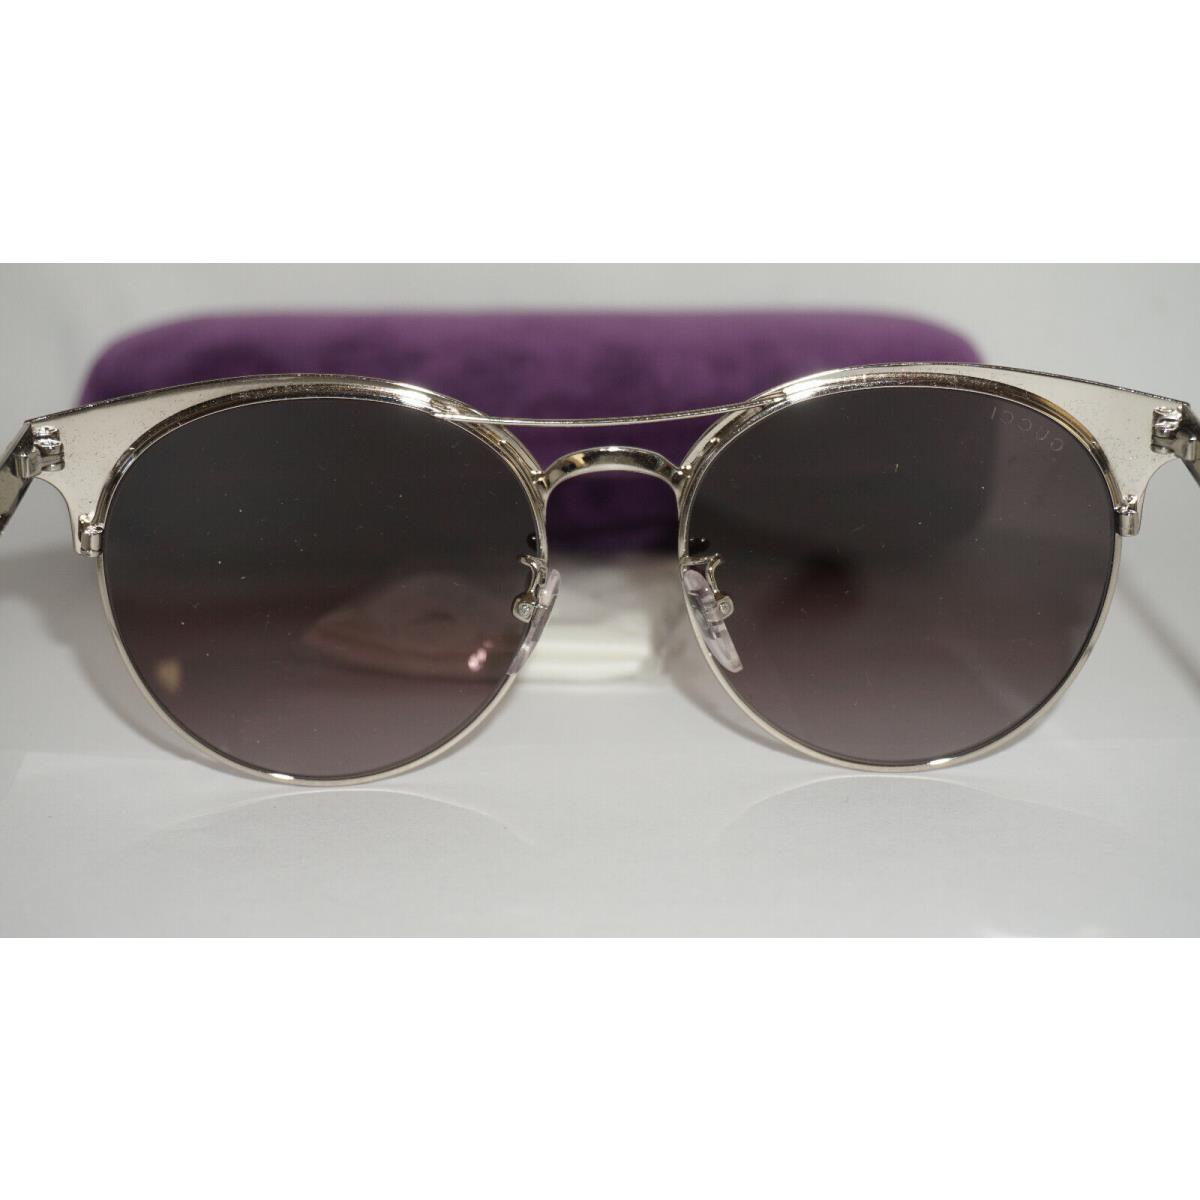 Gucci sunglasses  - Burgundy Palladium , Burgundy Palladium Frame, Grey Gradient Lens 7